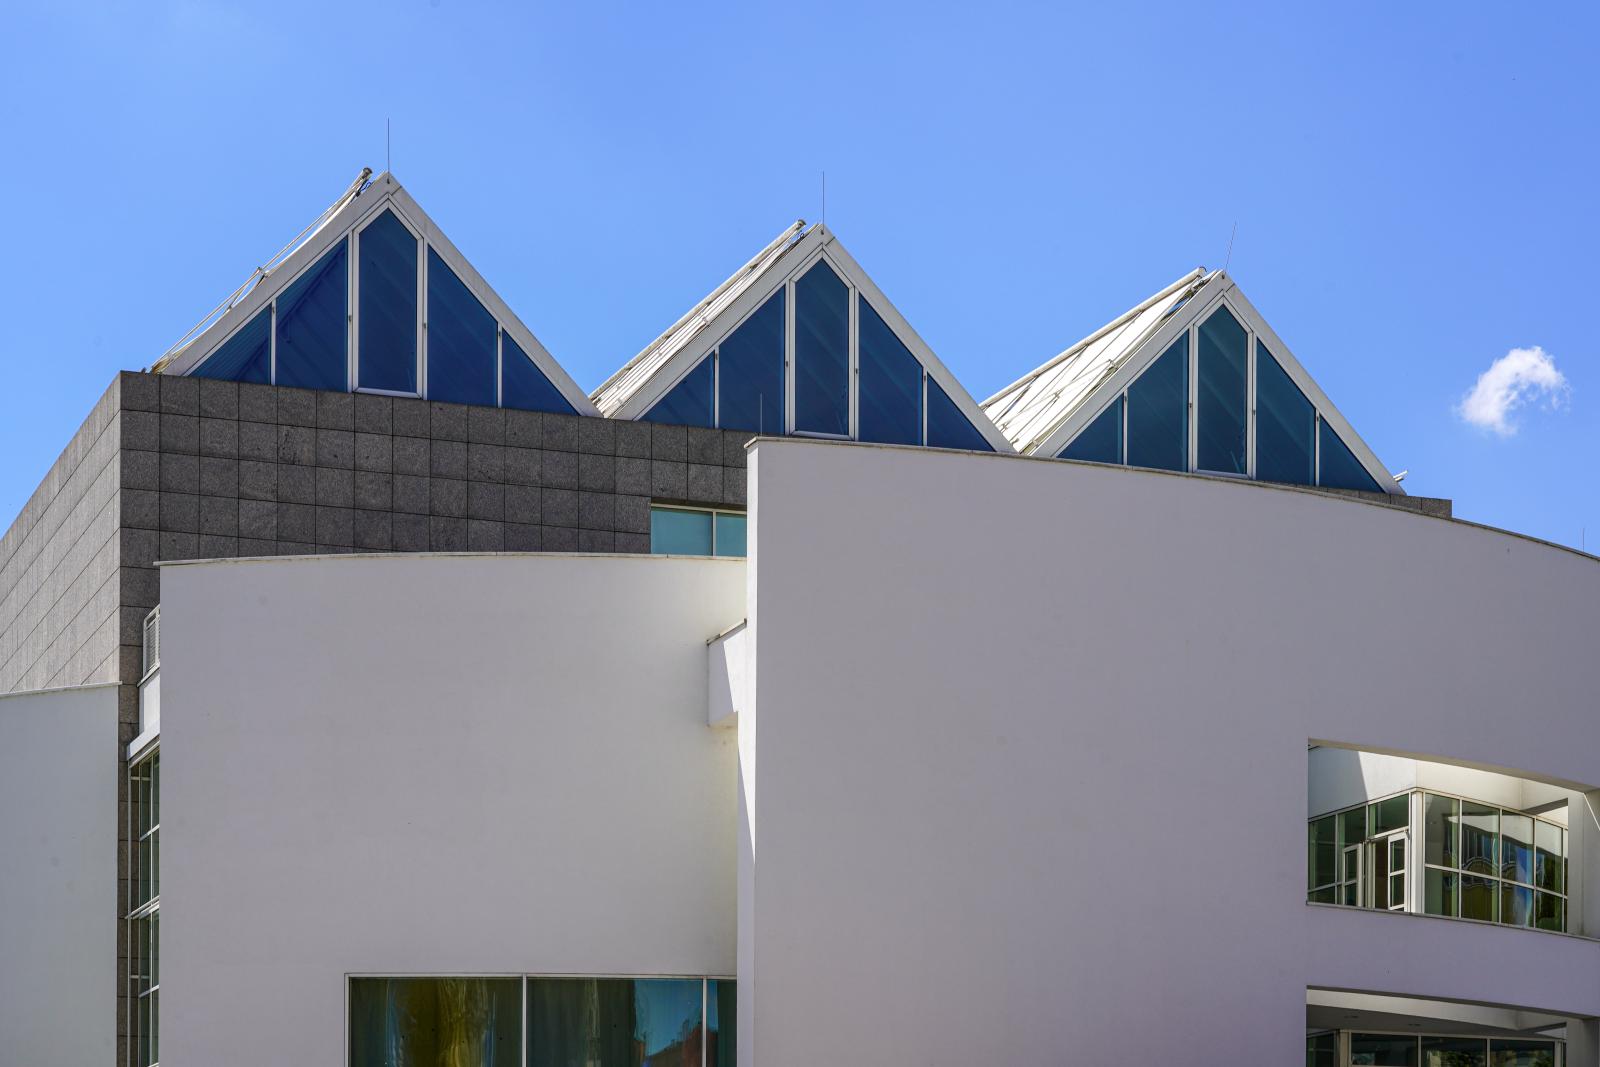 Stadthaus Ulm designed by New York Architect Richard Meier